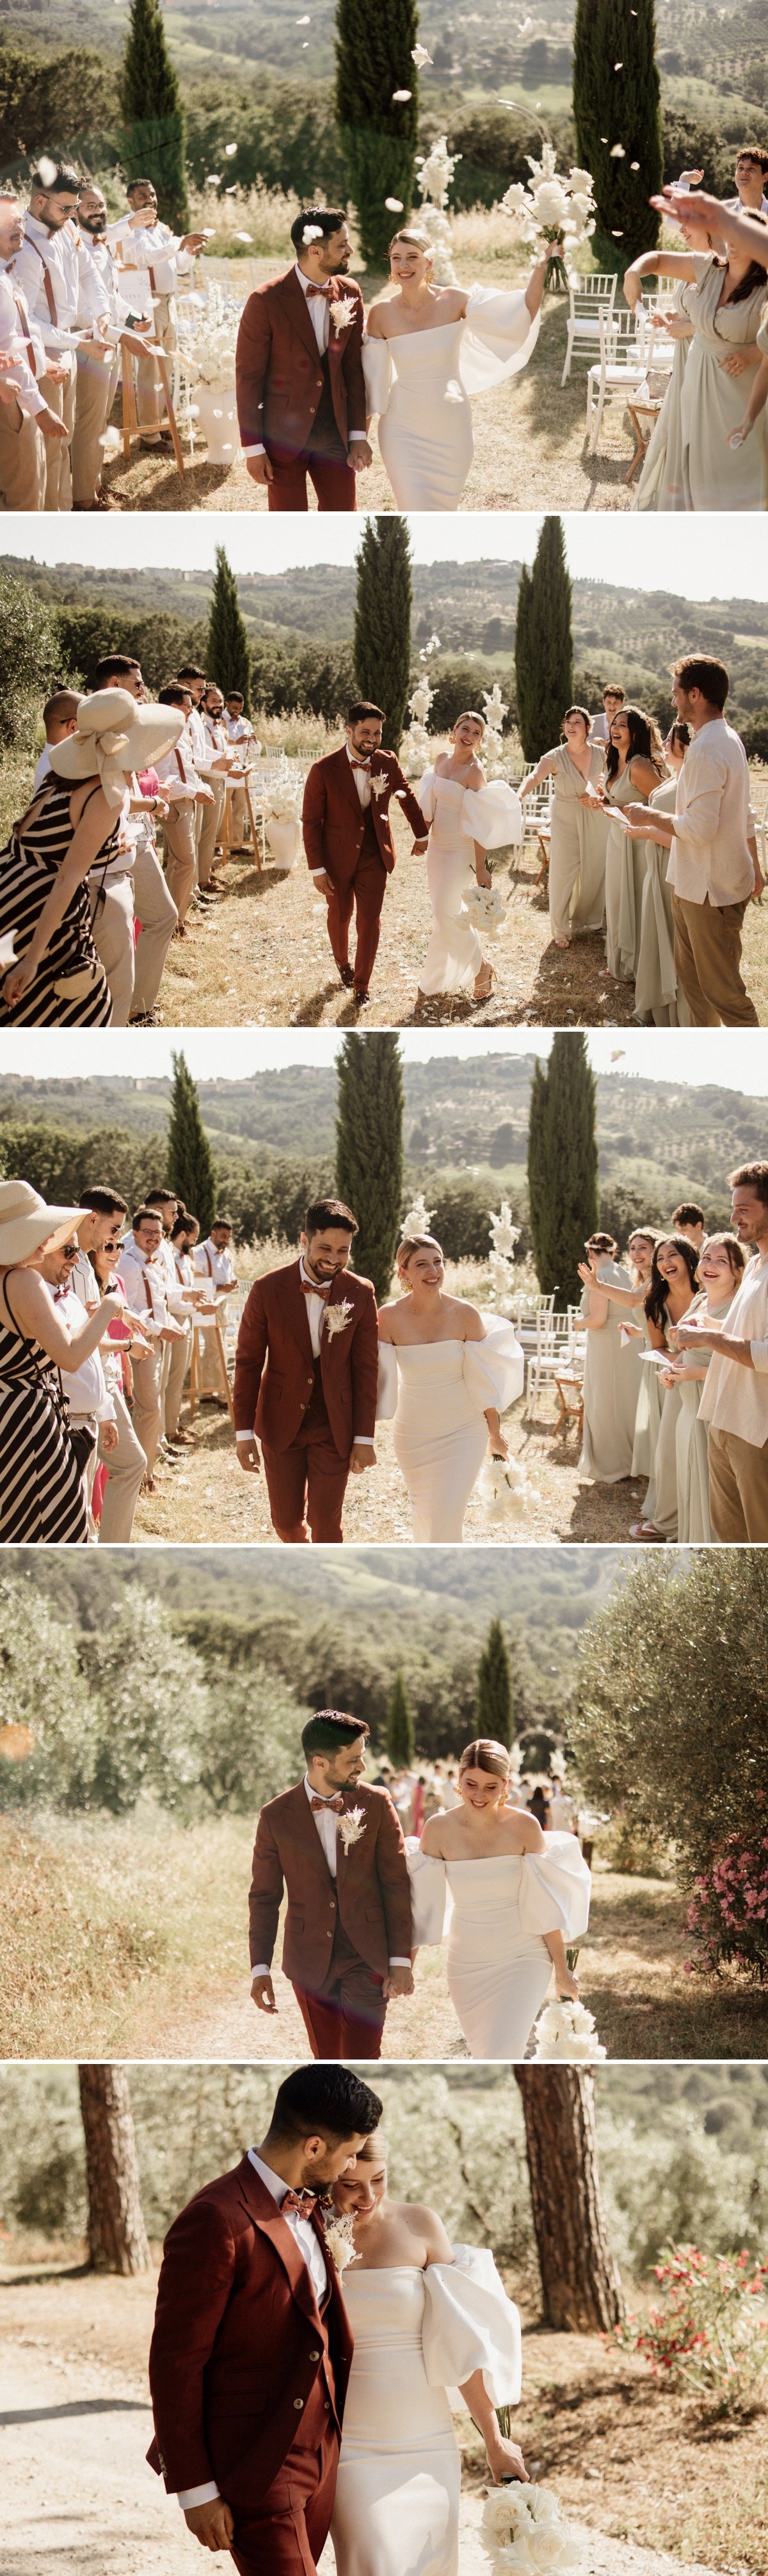 tuscany-wedding-dallk-14.jpg